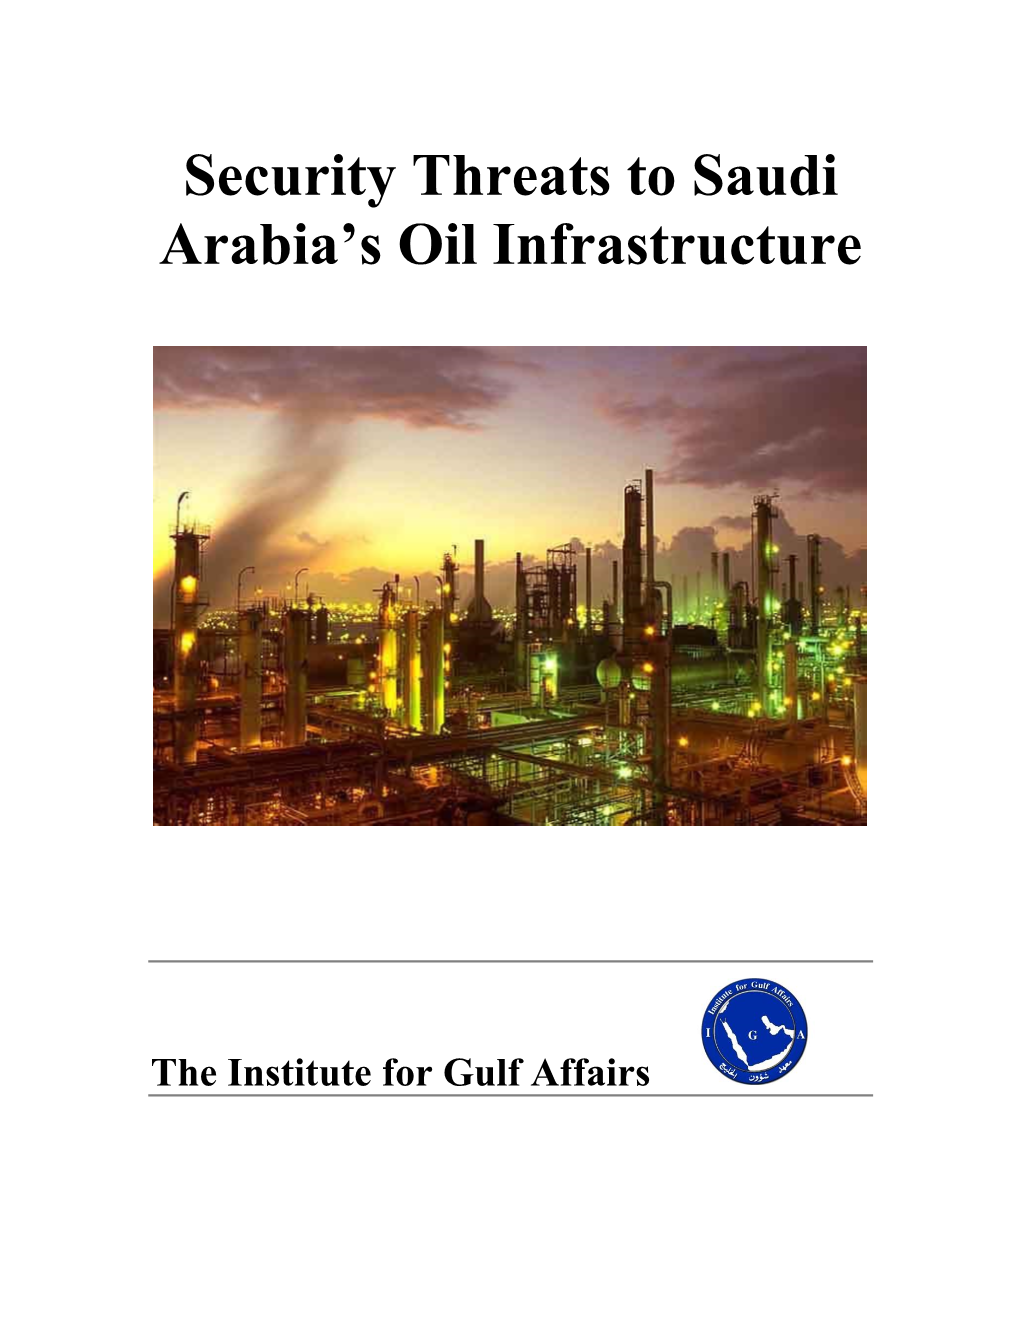 Security Threats to Saudi Arabia's Oil Infrastructure